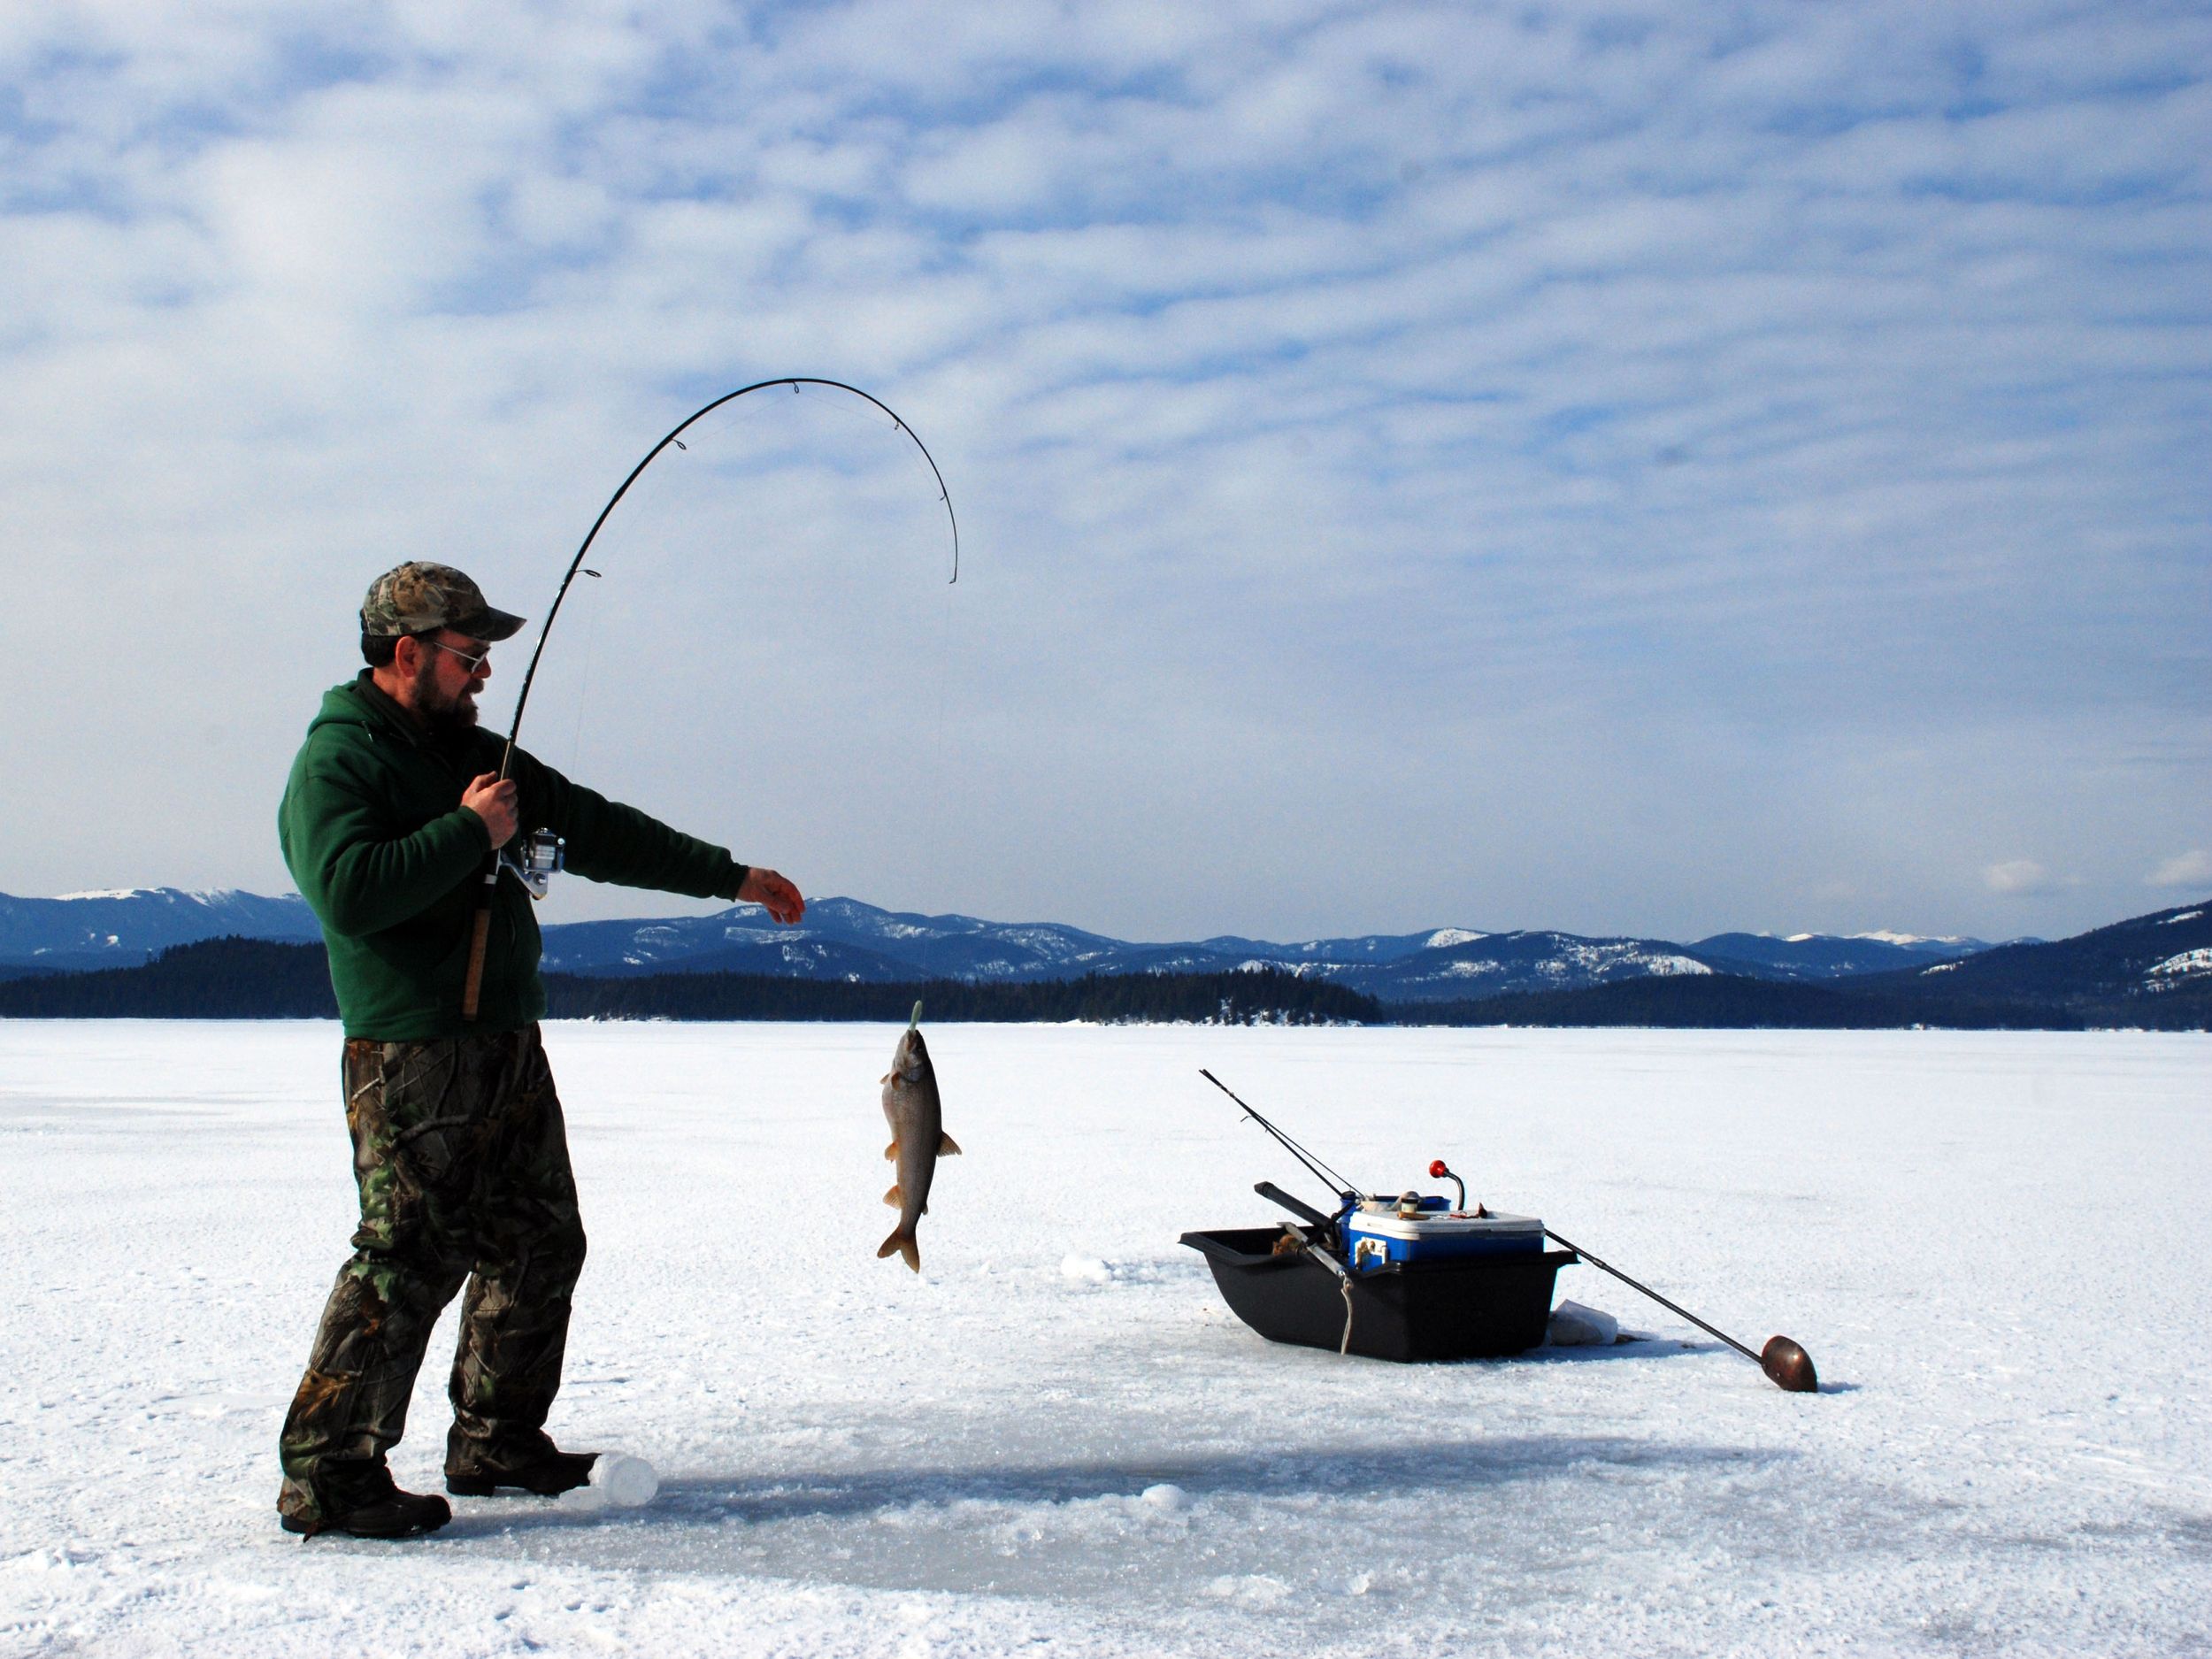 Ice fishing parameters vary